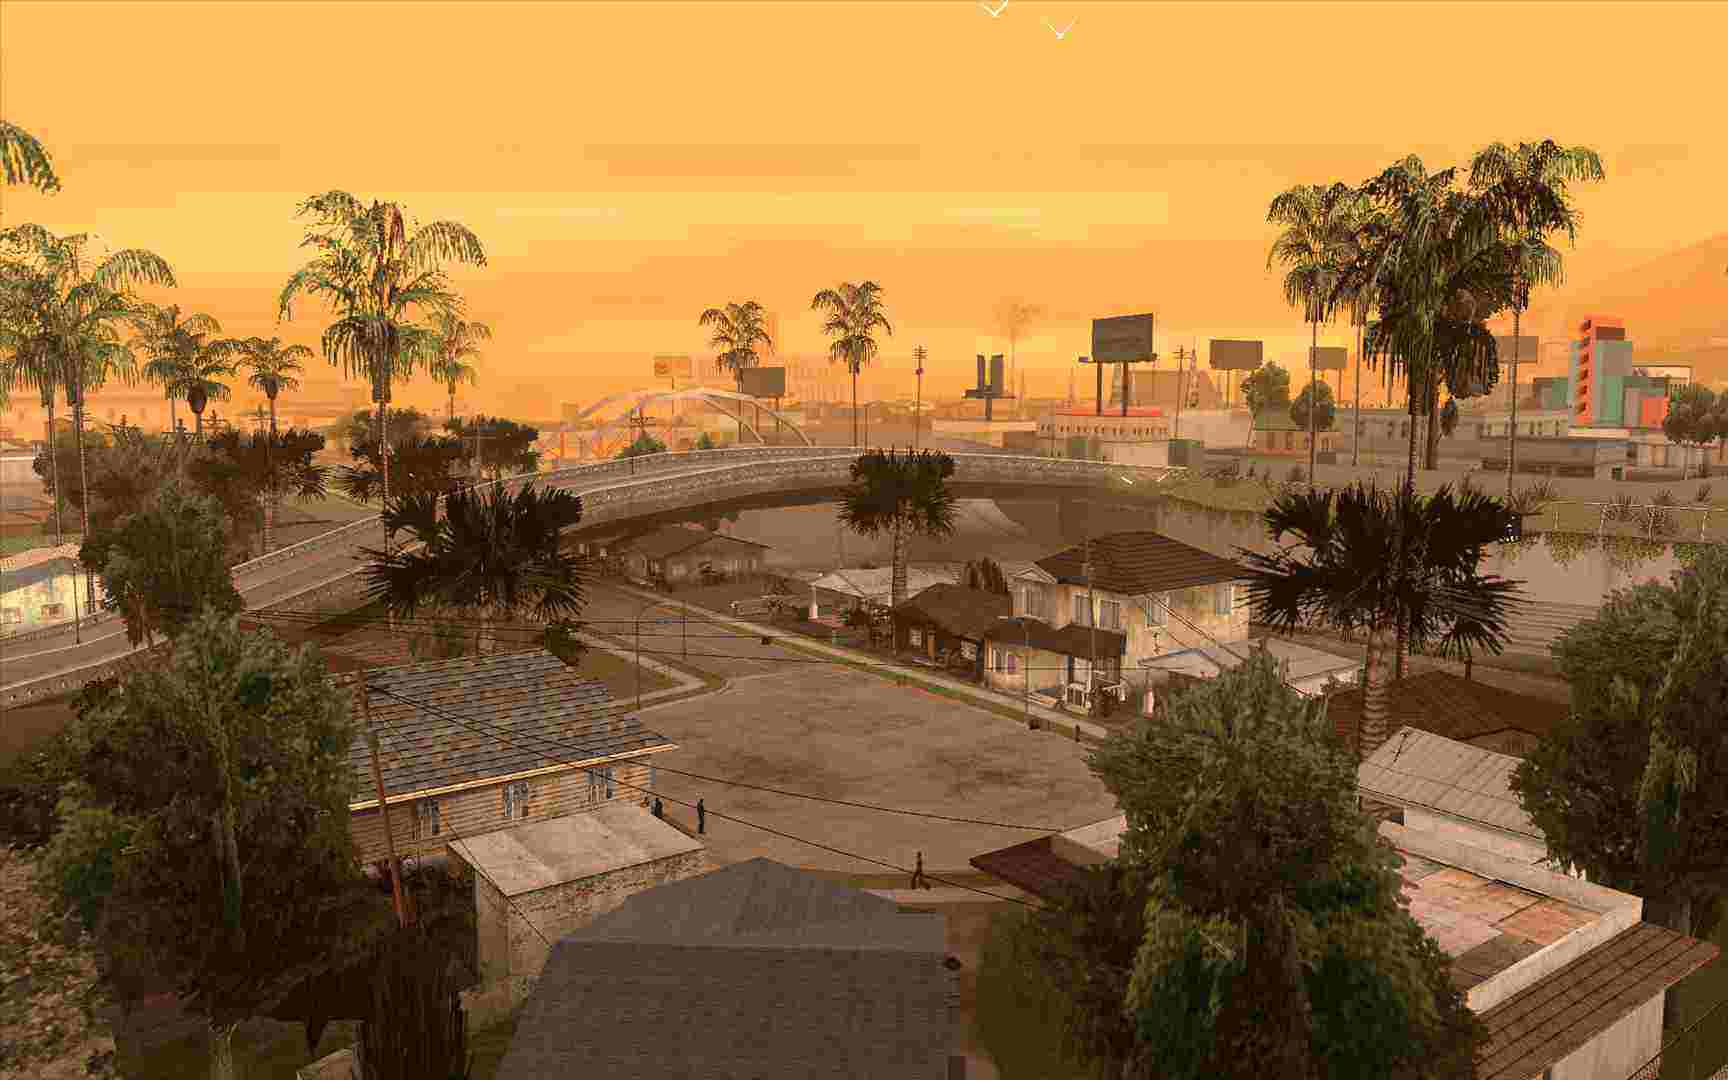 Grand Theft Auto San Andreas mod